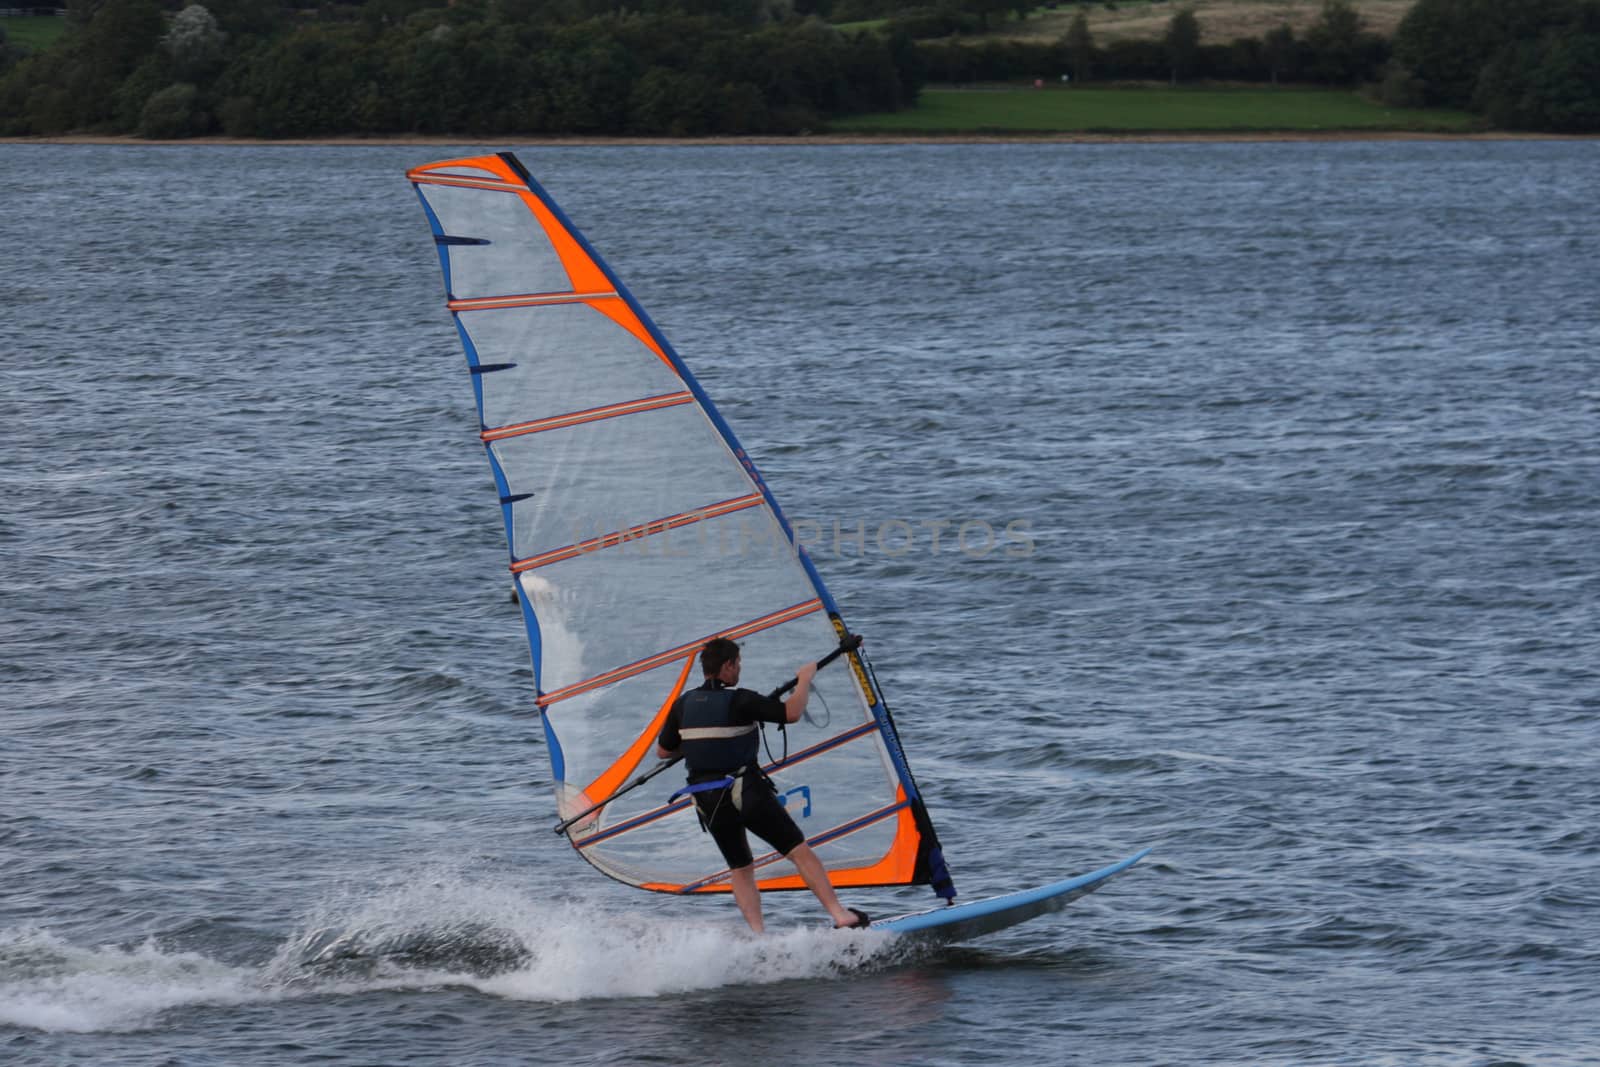 windsurfer on a lake with a blue sail